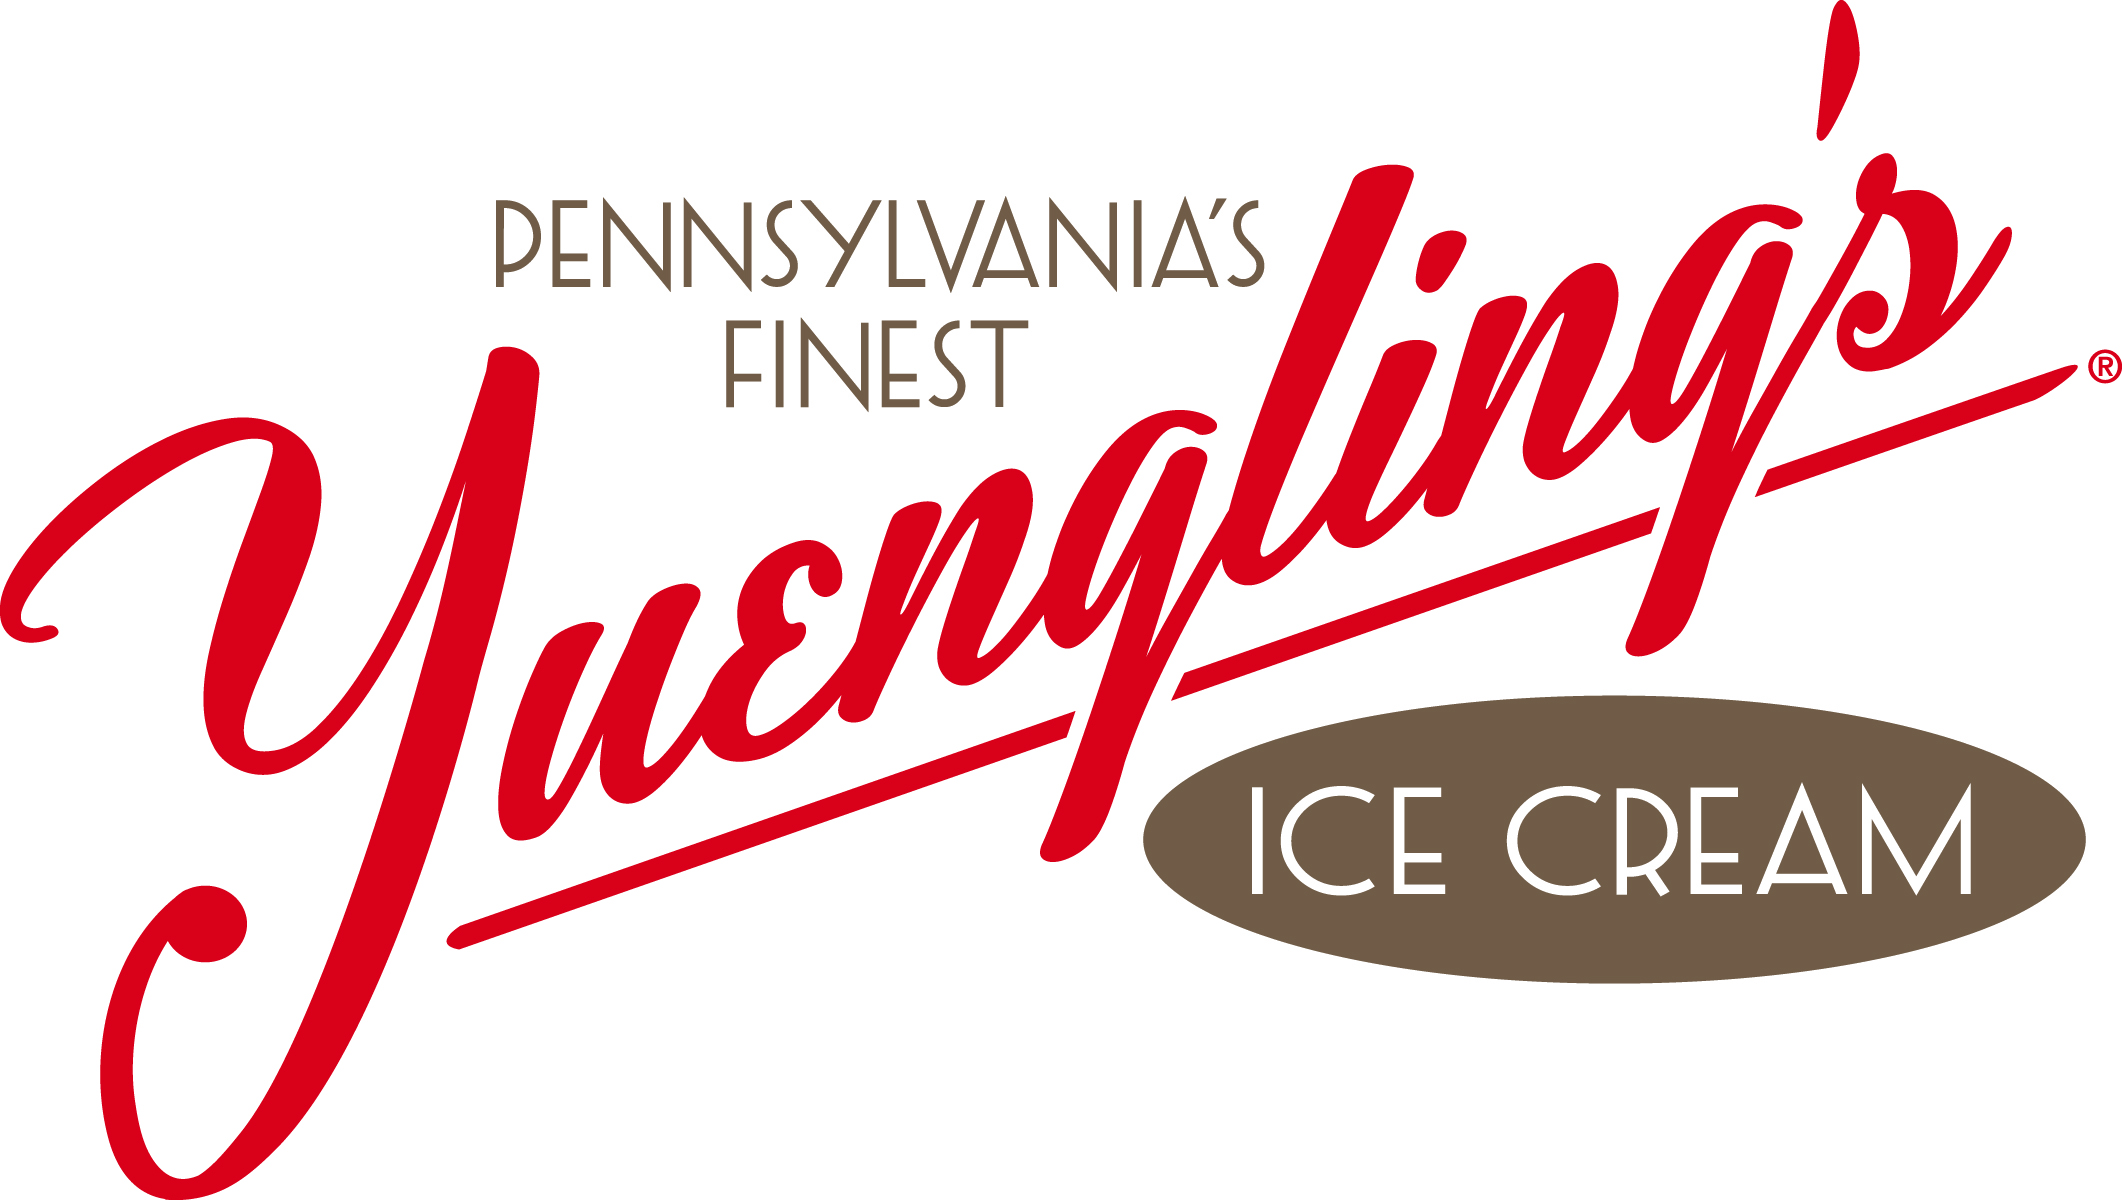 Yuengling Ice Cream